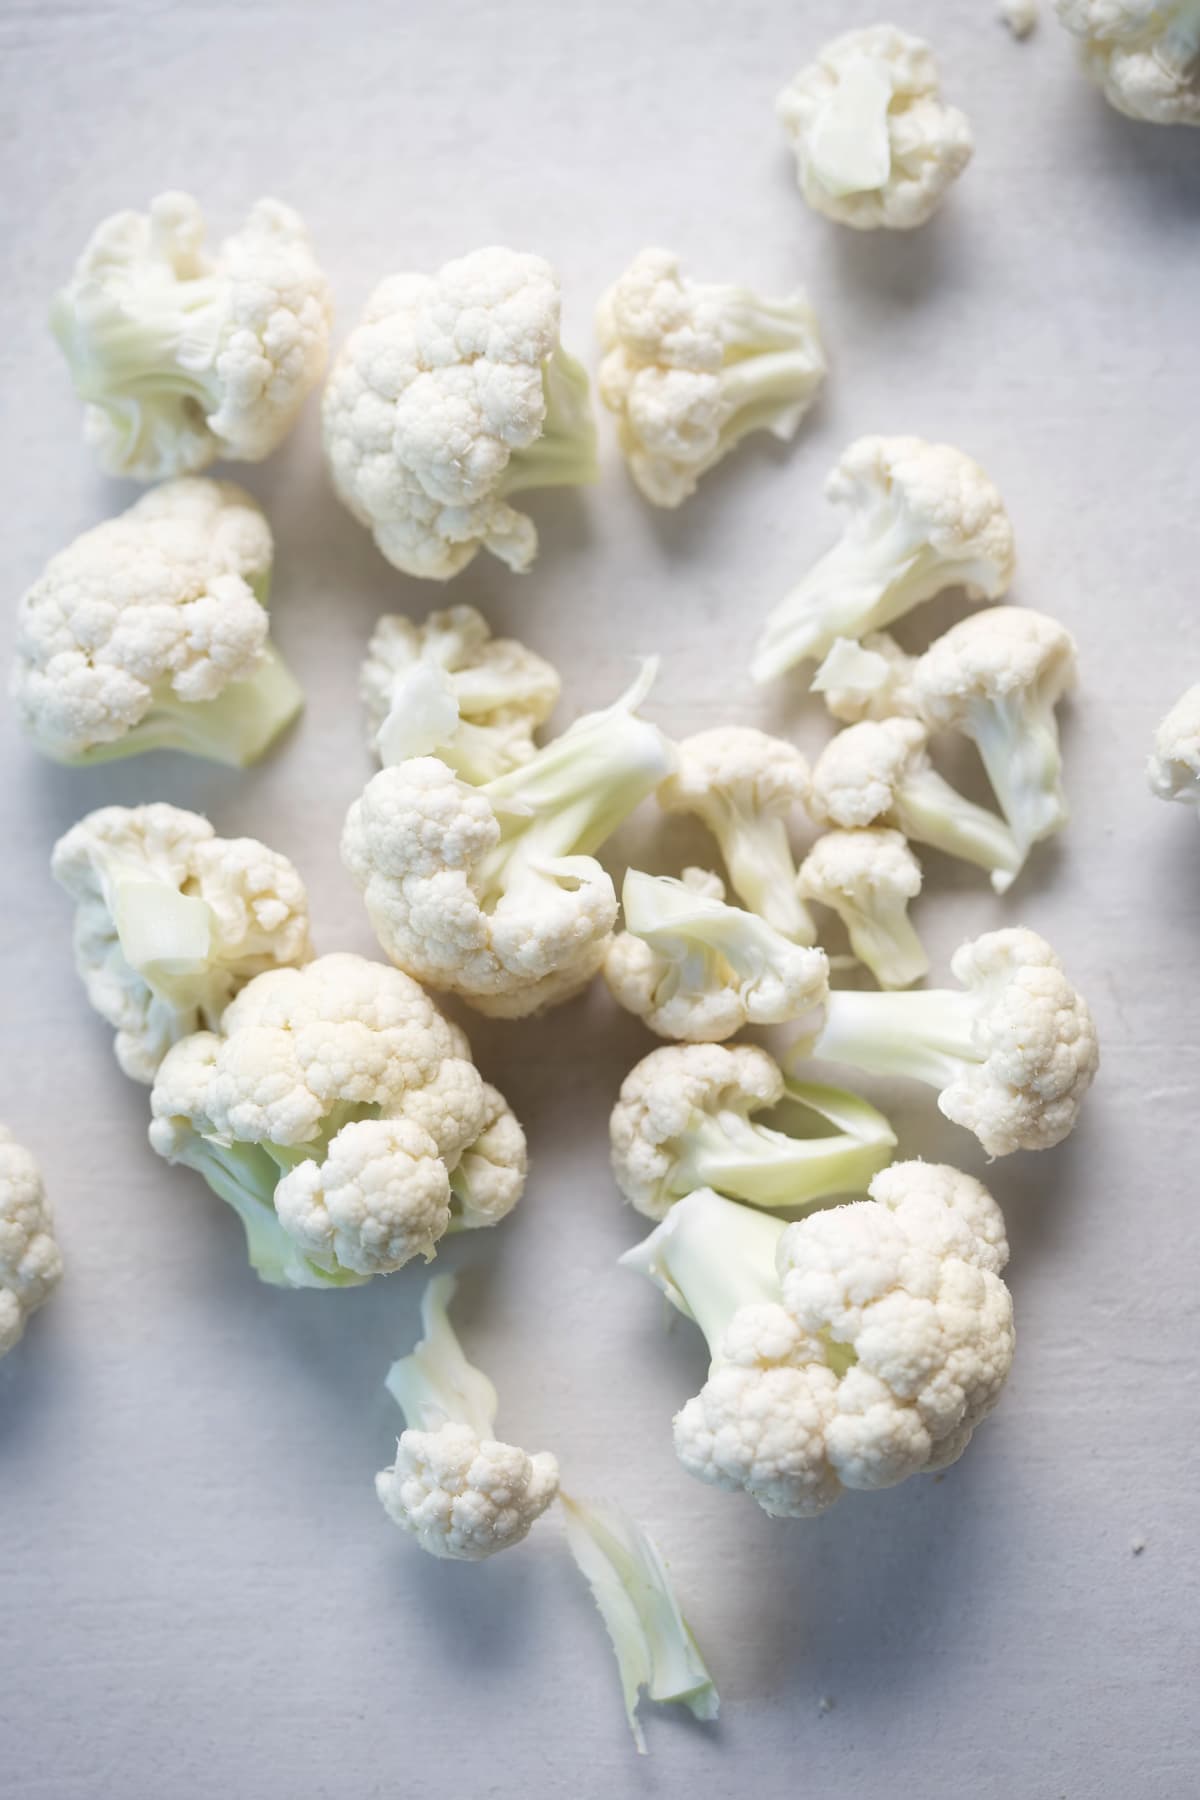 Cauliflower cut into florets on white surface